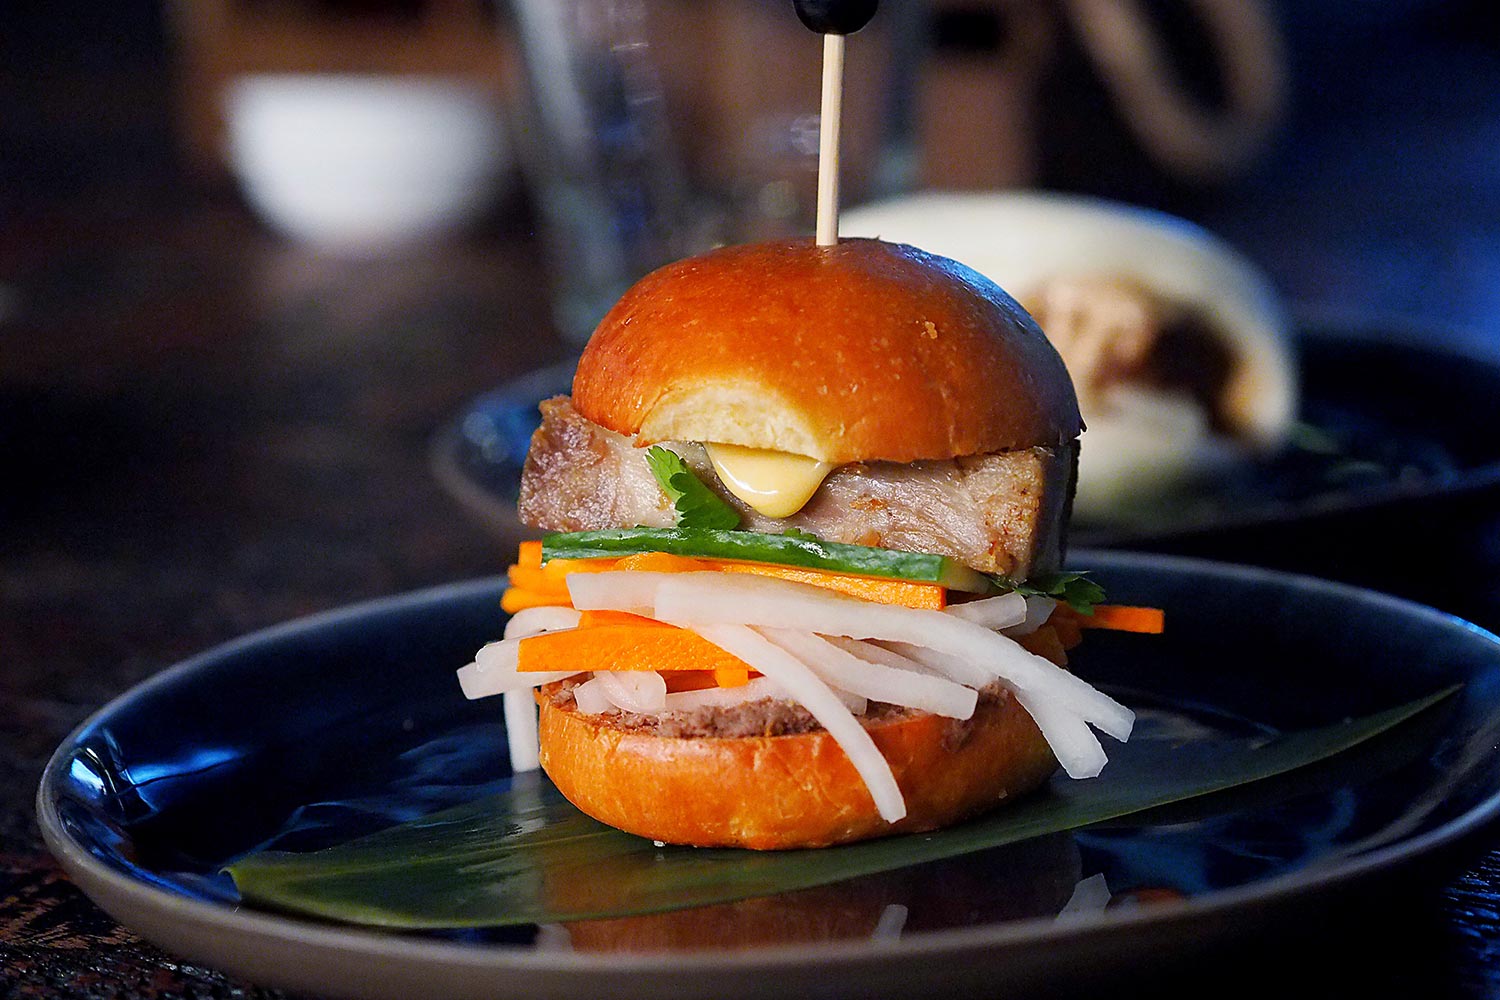 Sydney Food Blog Review of Junk Lounge at Cruise Bar, Circular Quay: Pork belly banh mi slider with pickled daikon, cucumber & shallots, $7